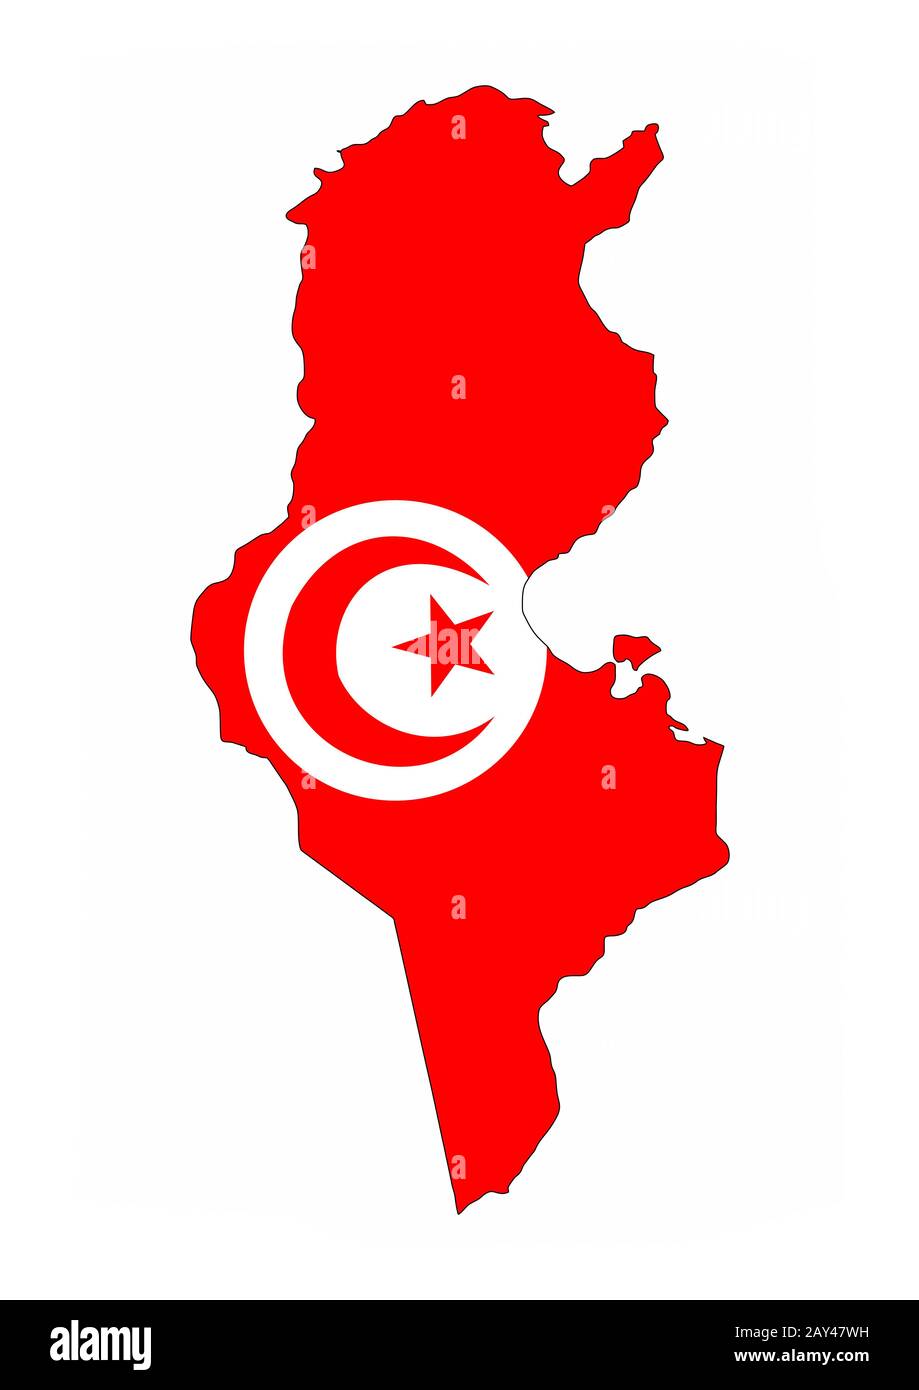 tunisia flag map Stock Photo